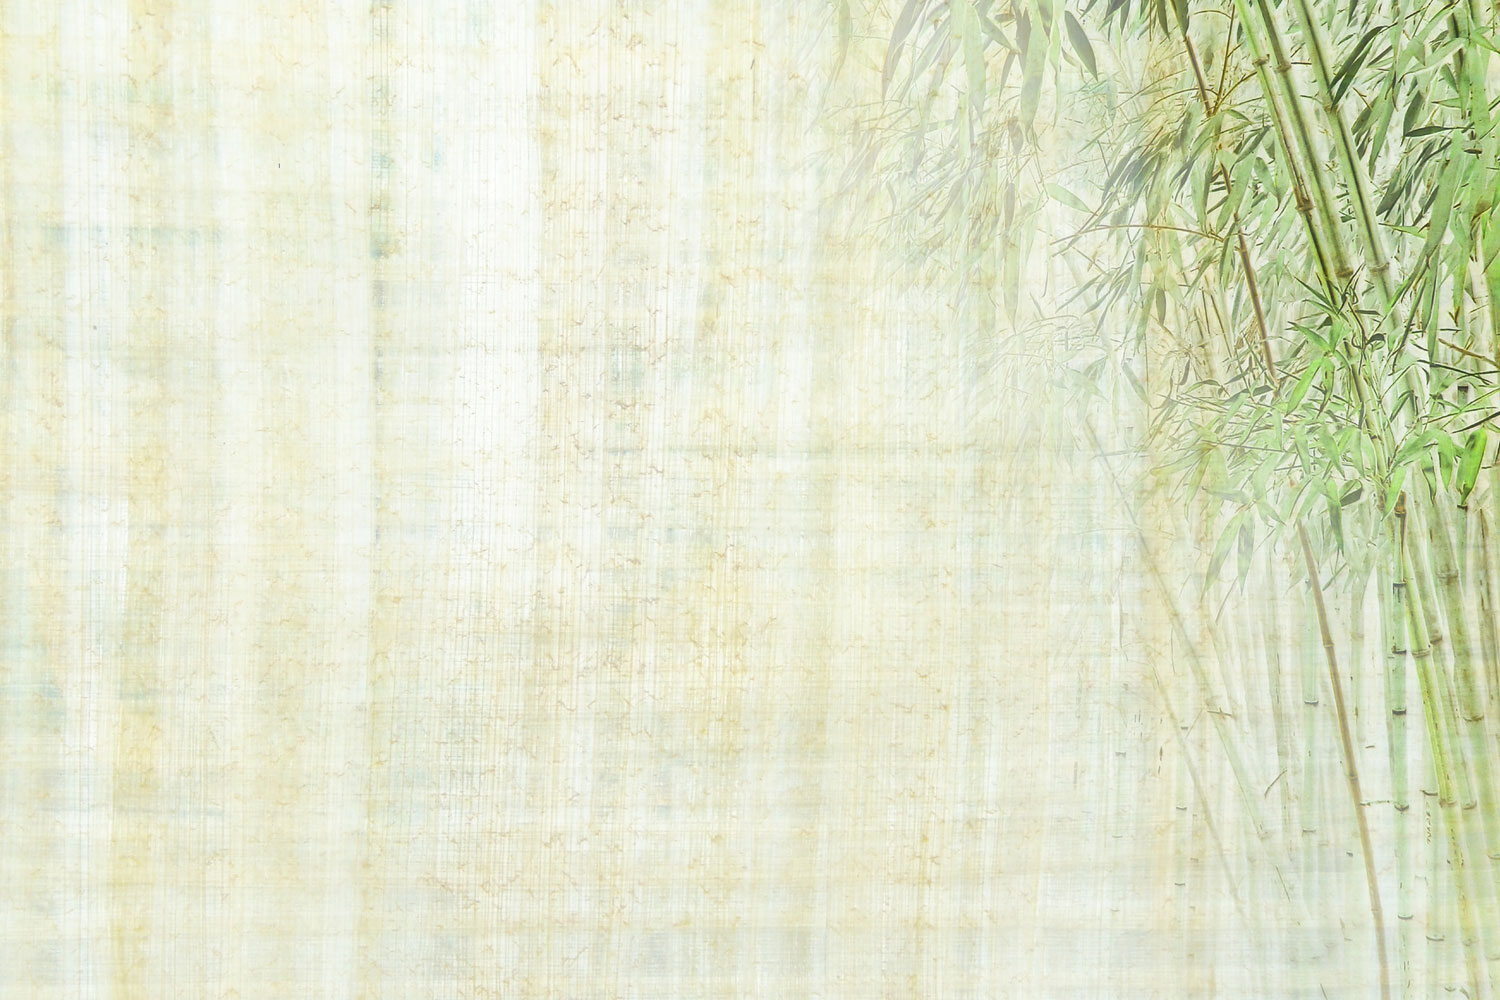 Bamboo Texture - Ancient Japanese Paper Texture - HD Wallpaper 